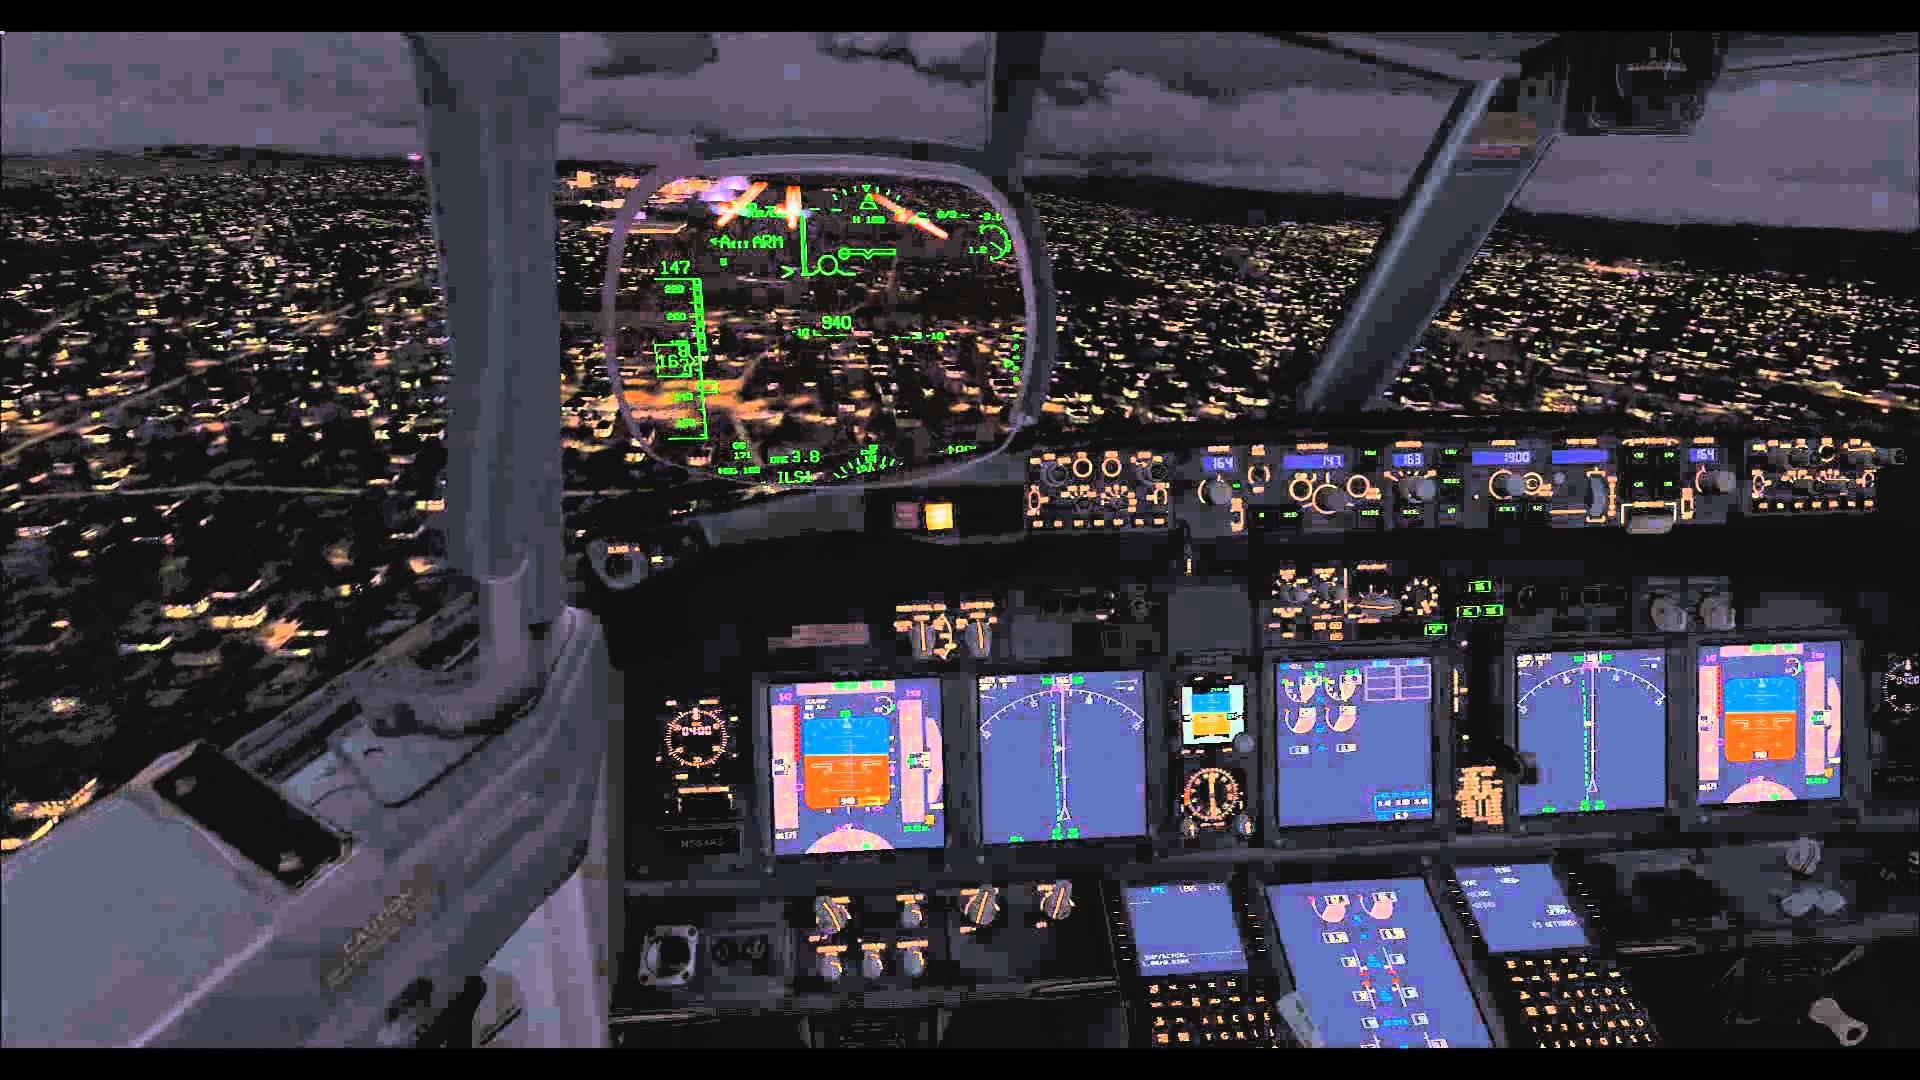 B737 Cockpit View Images Reverse Search. 737 Flight Simulator Cockpit